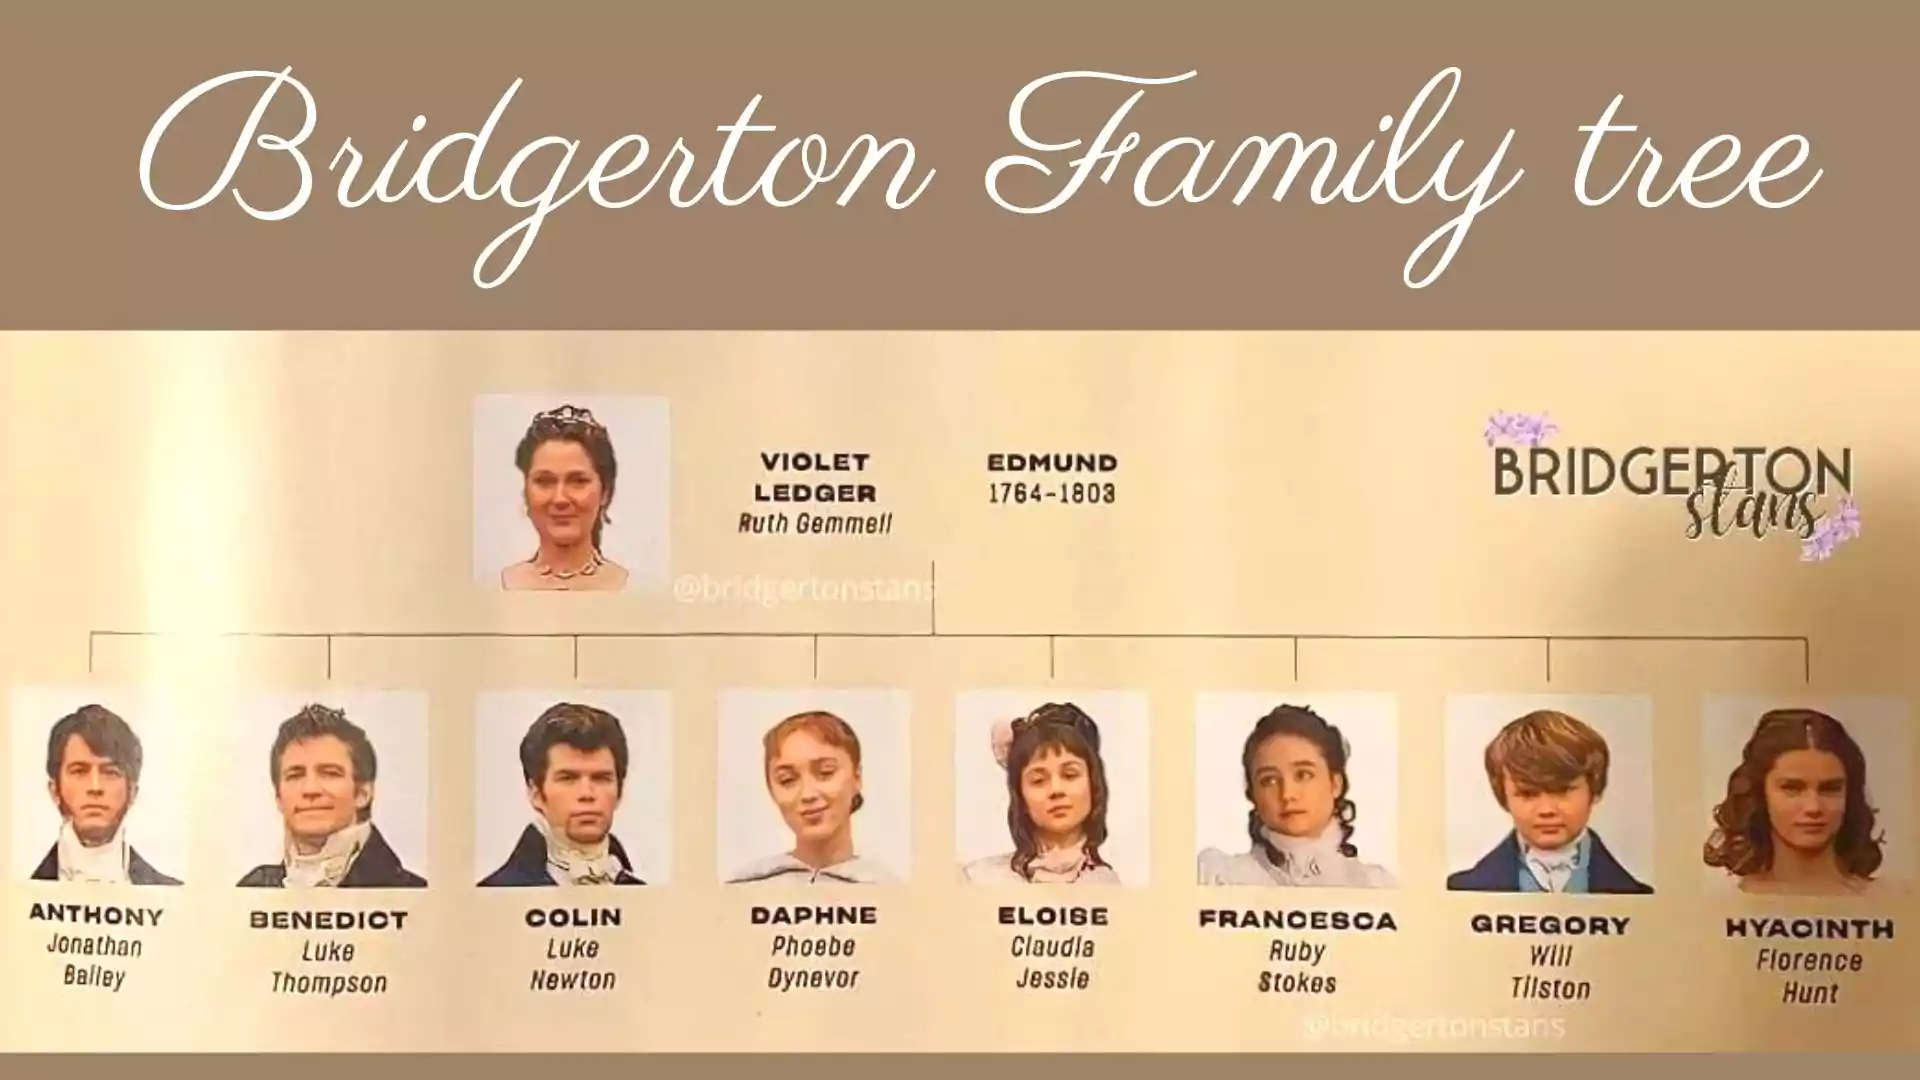 Bridgerton Family tree Wallpaper and images